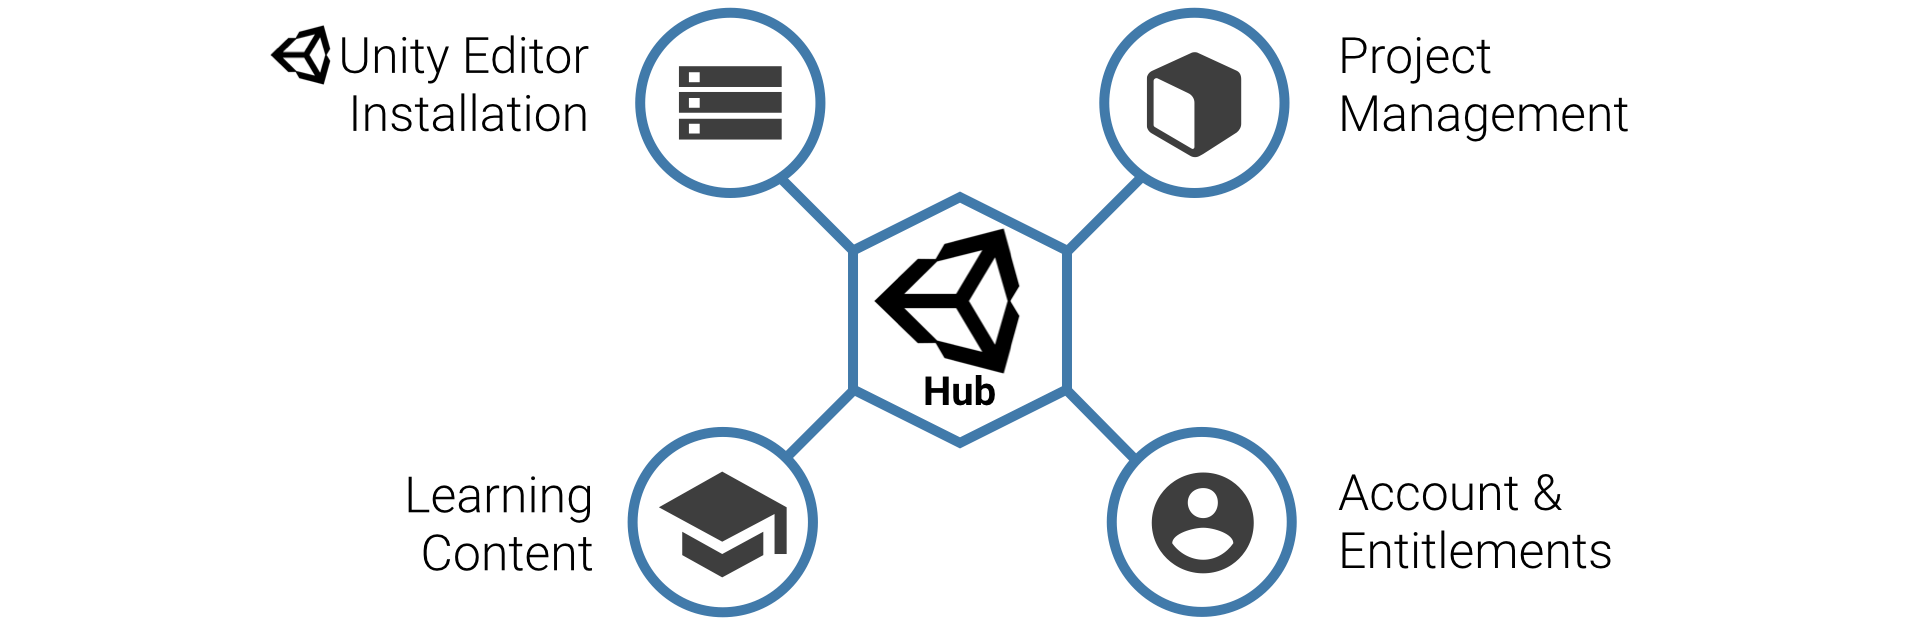 download unity hub 2021